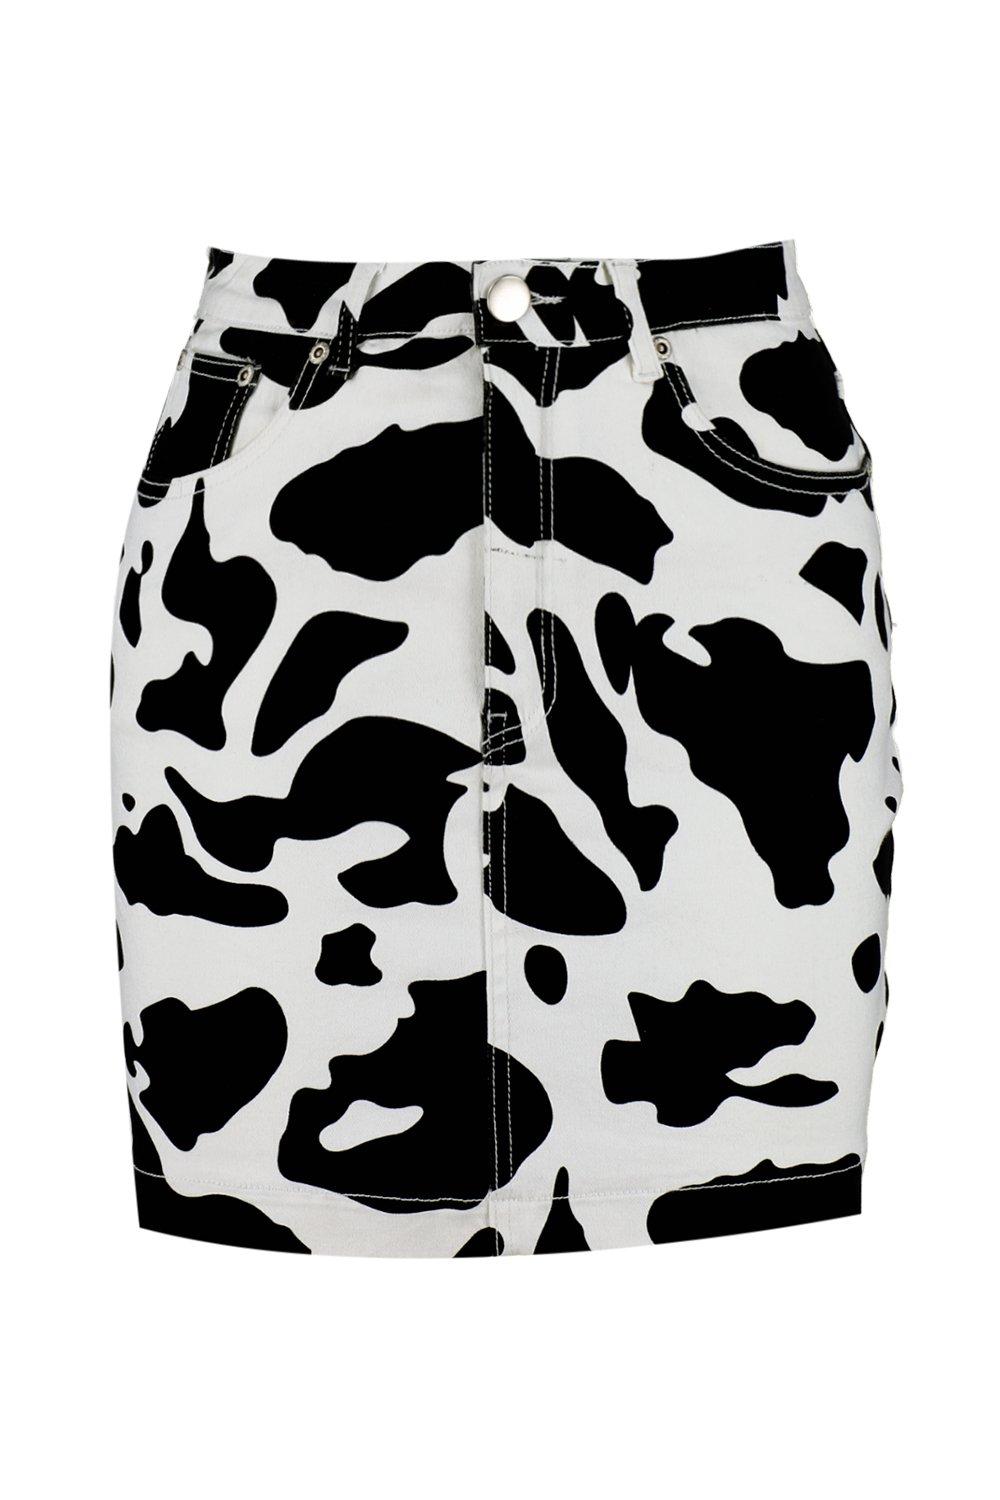 boohoo cow print skirt